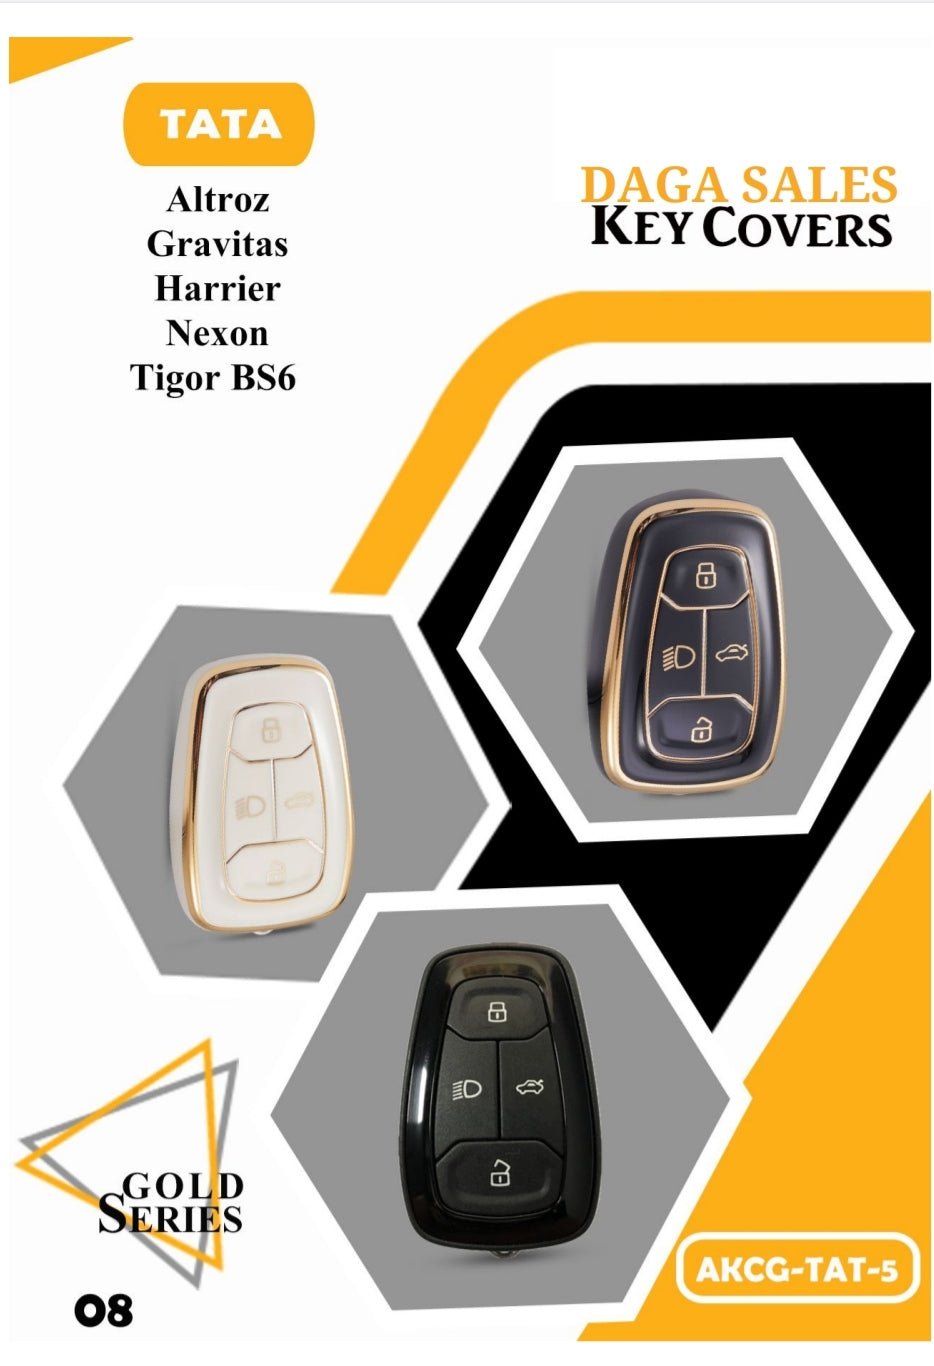 Car Key cover for Tata – Daga sales 